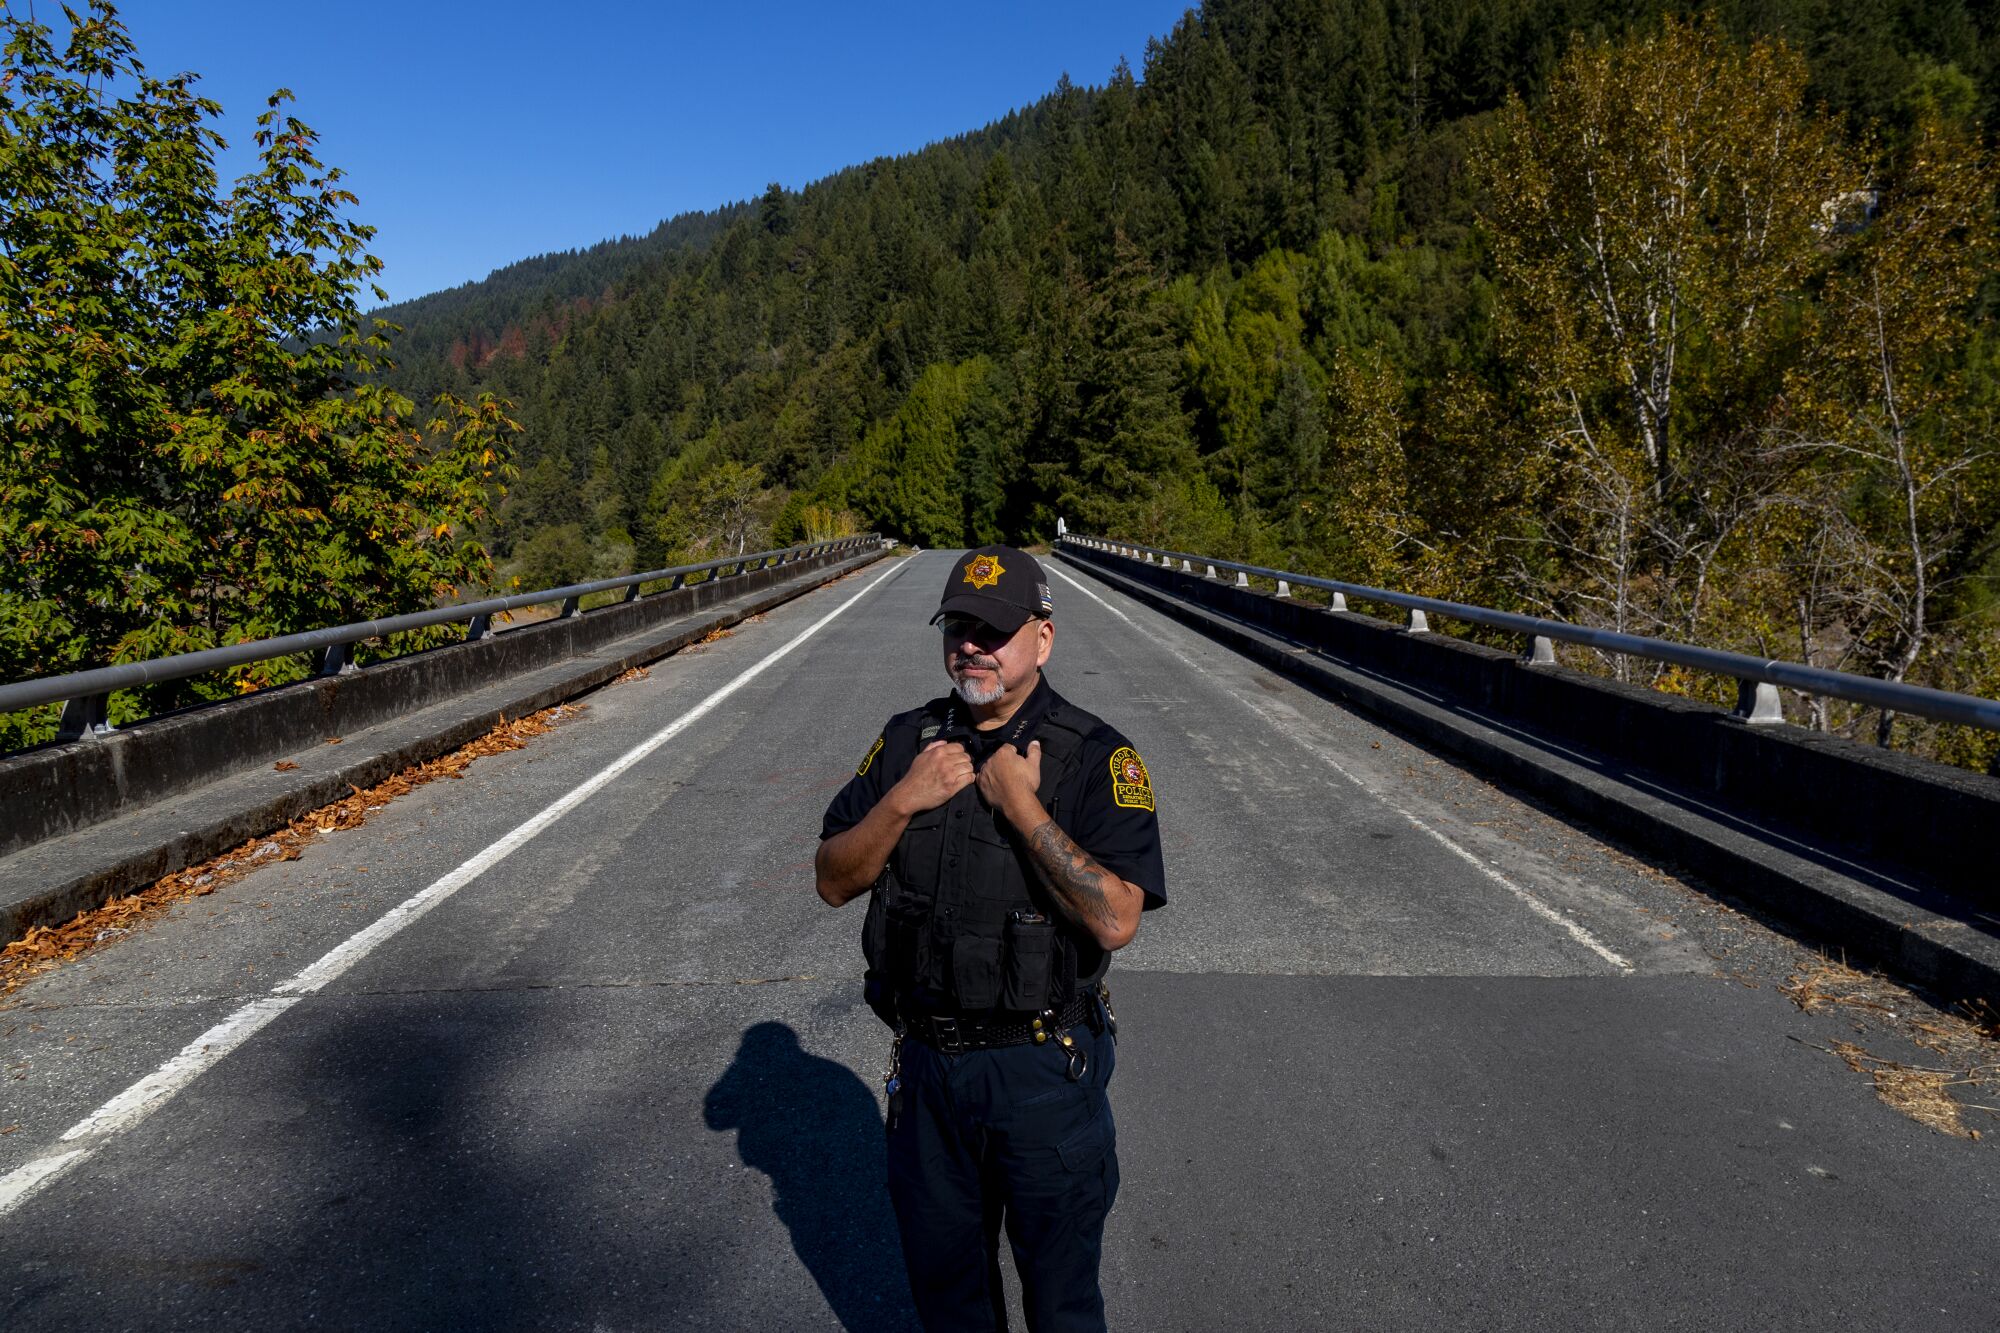 Yurok Tribal Police Chief Greg O'Rourke stands on a roadway bridge